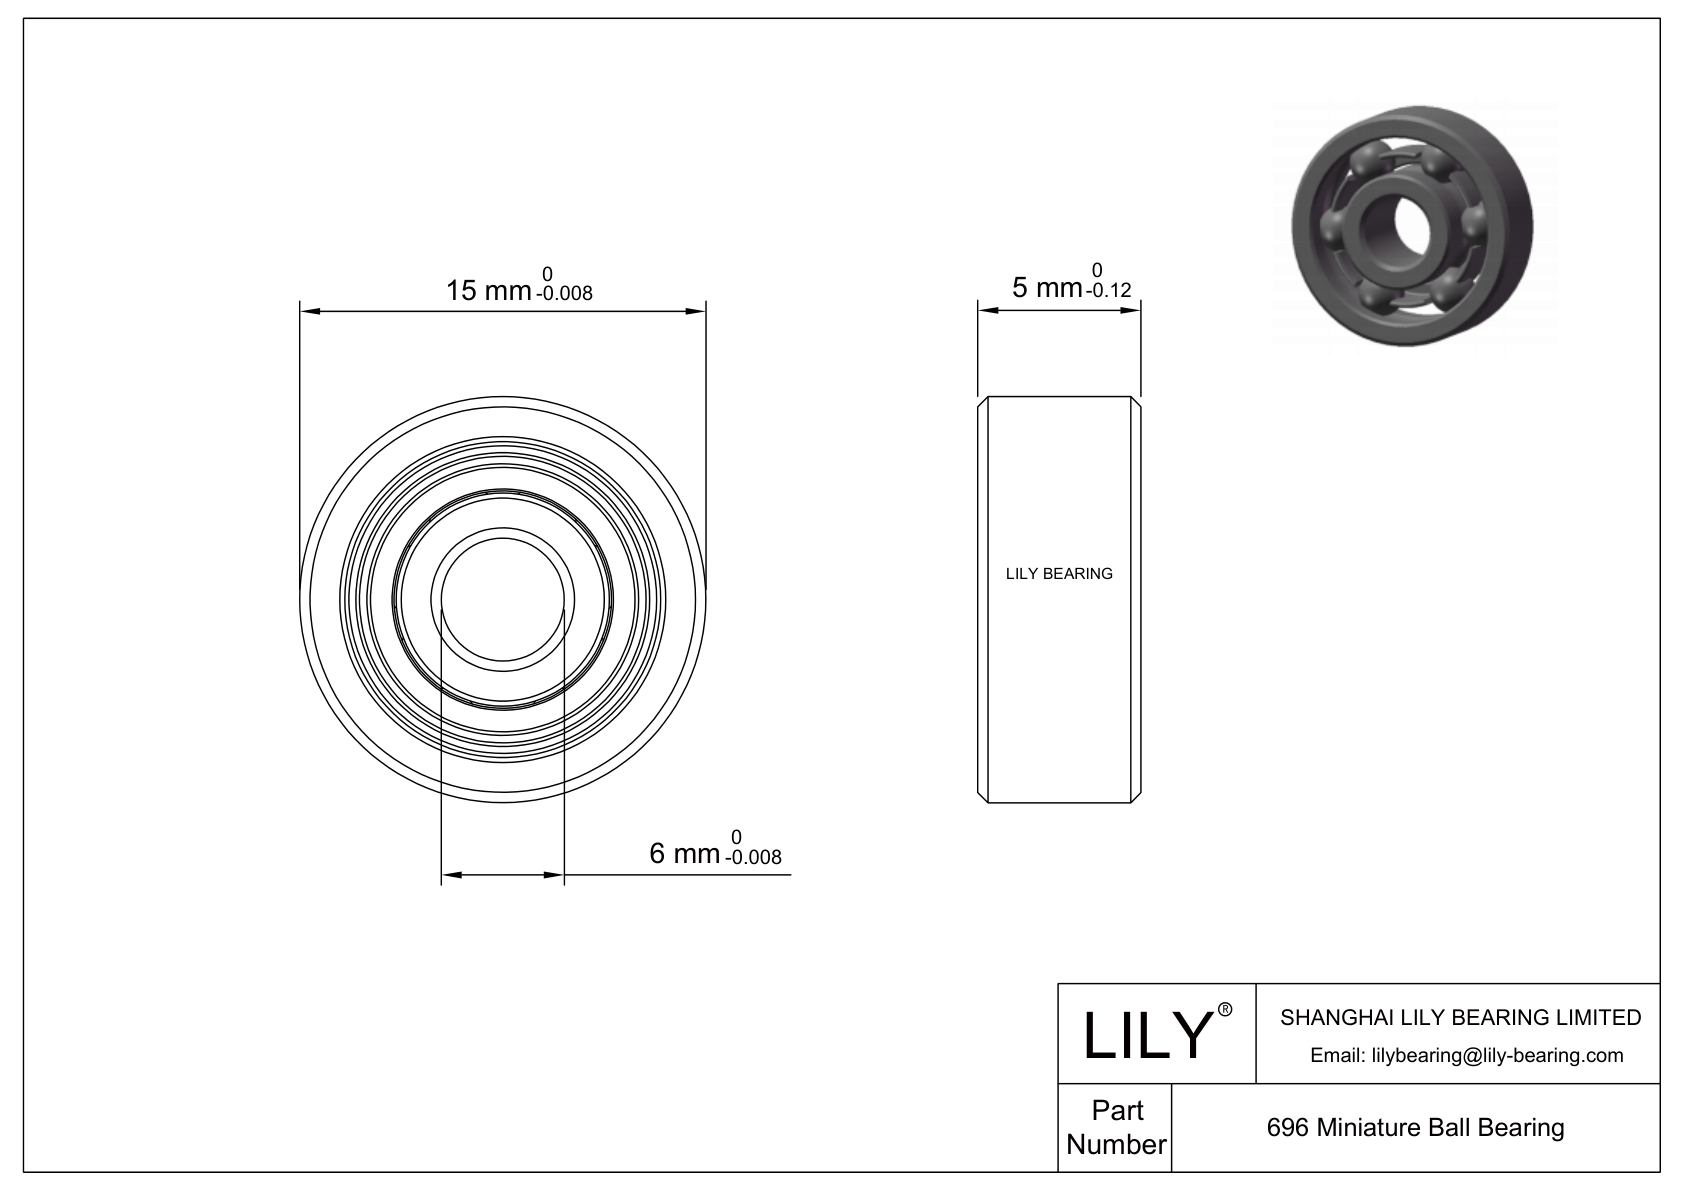 LILY-PU69620-8 Polyurethane Coated Bearing cad drawing